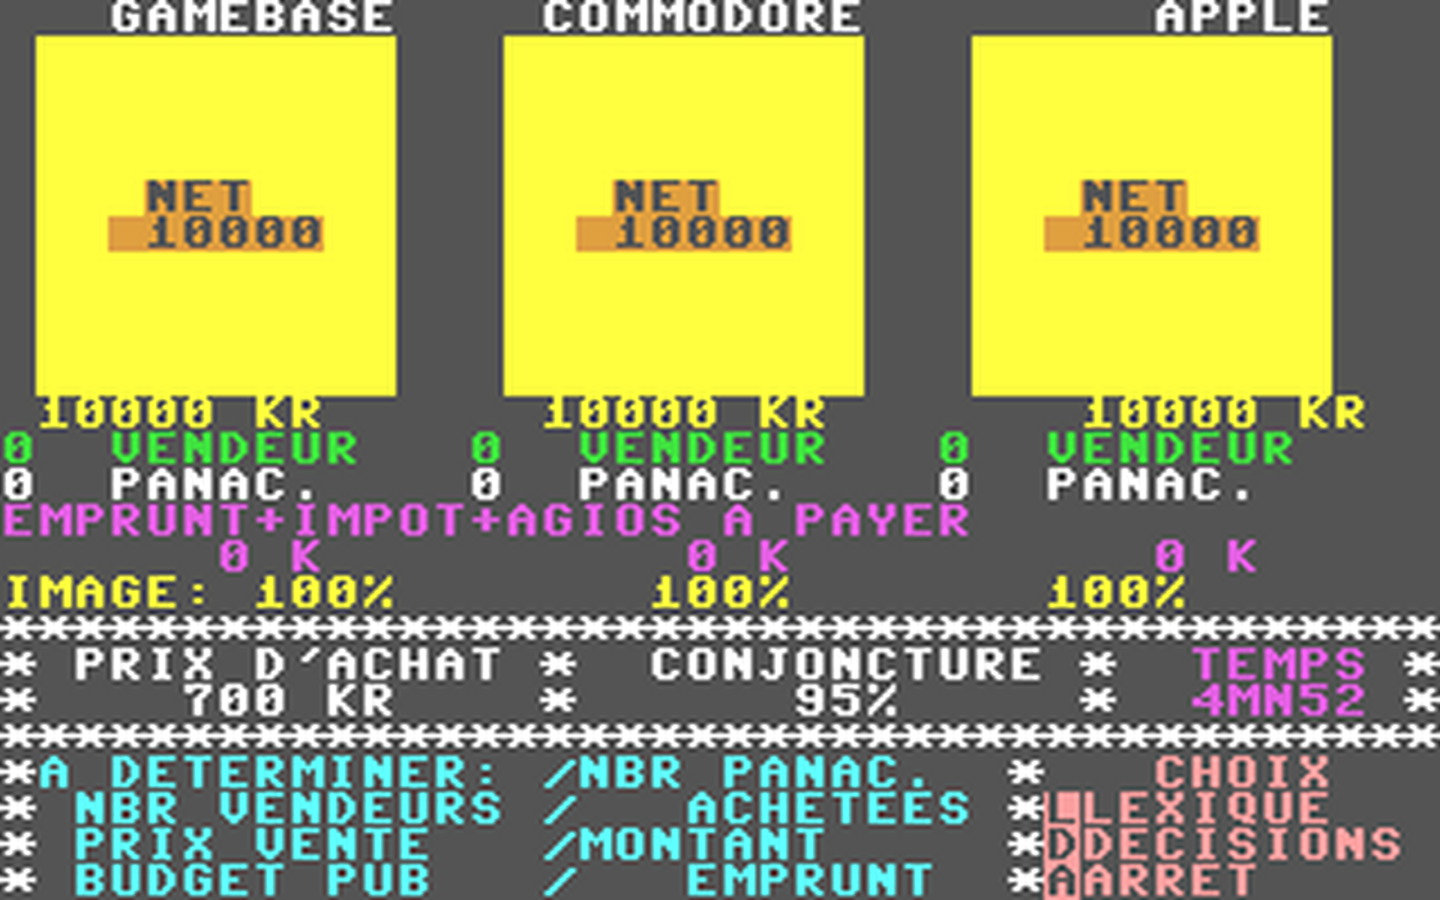 C64 GameBase Panach_64 Infomedia/Floopy_64 1986